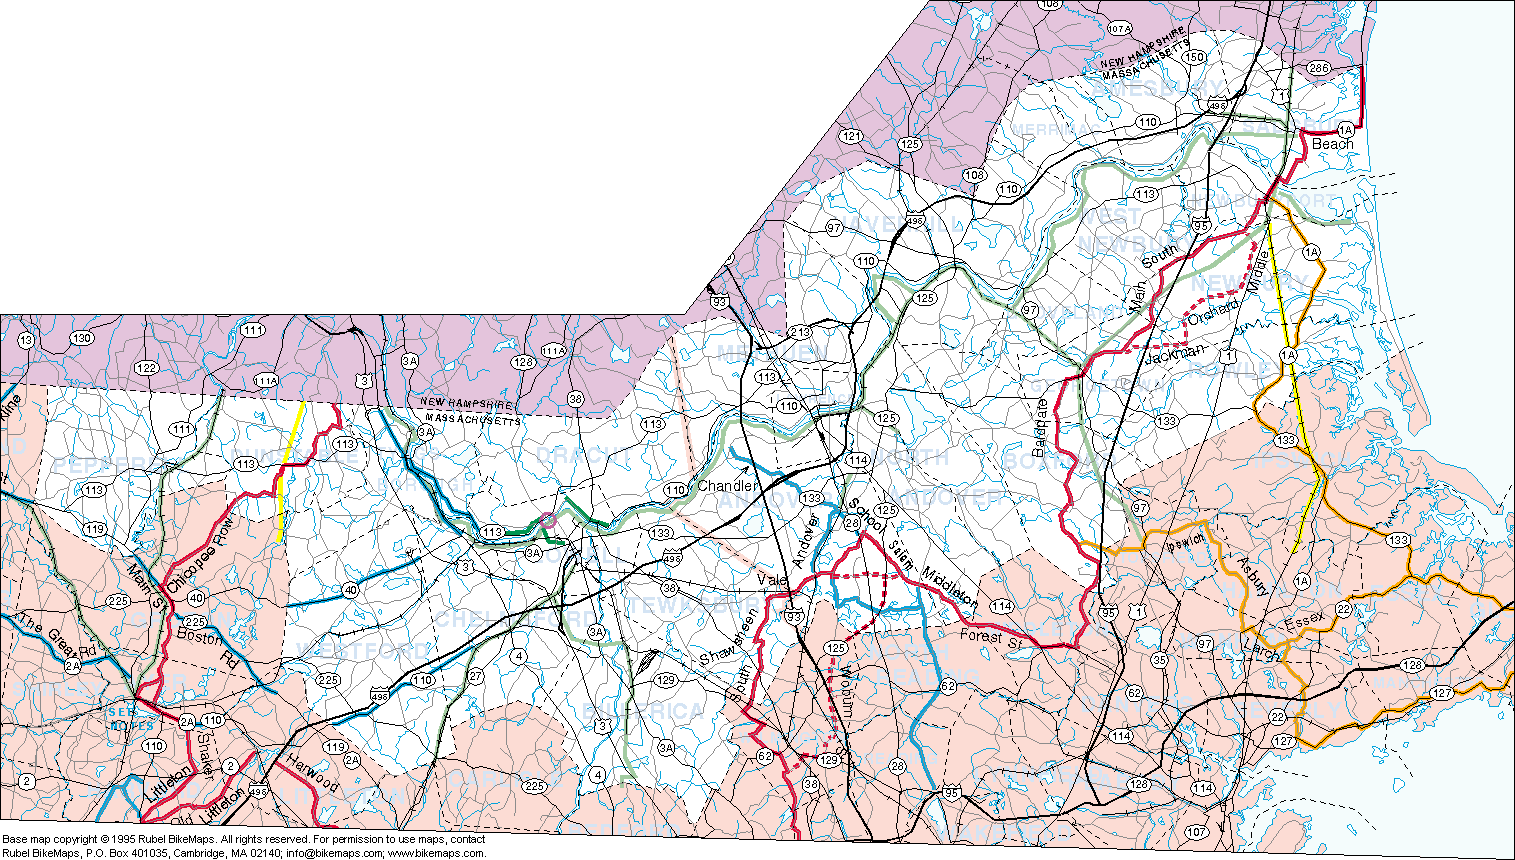 Merrimack Valley, Northern Middlesex map (153 kB)